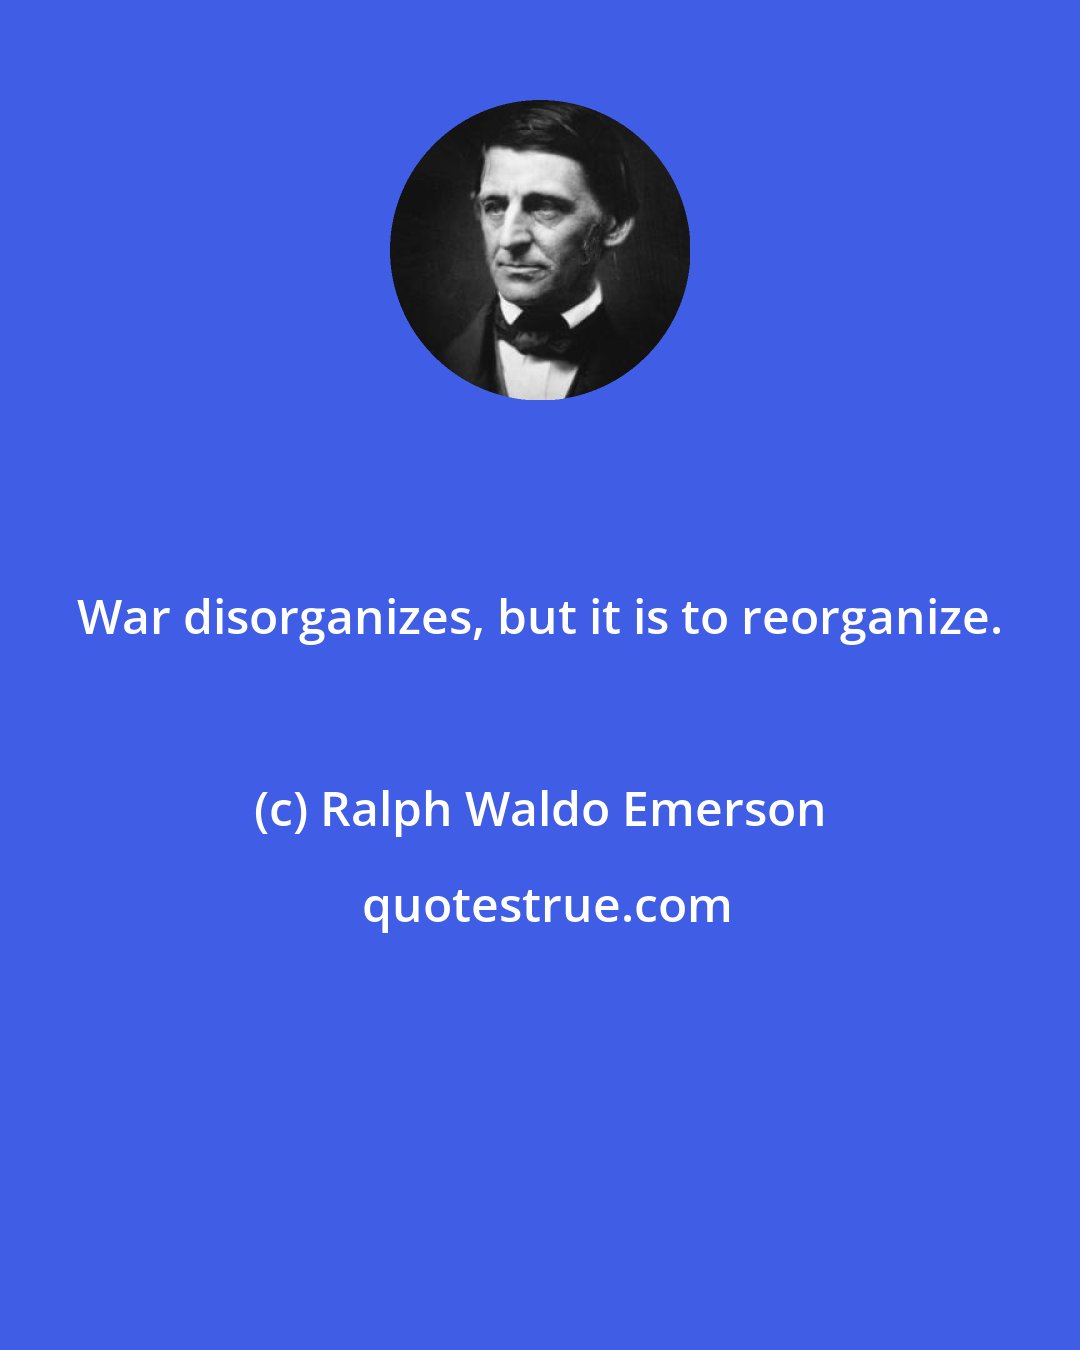 Ralph Waldo Emerson: War disorganizes, but it is to reorganize.